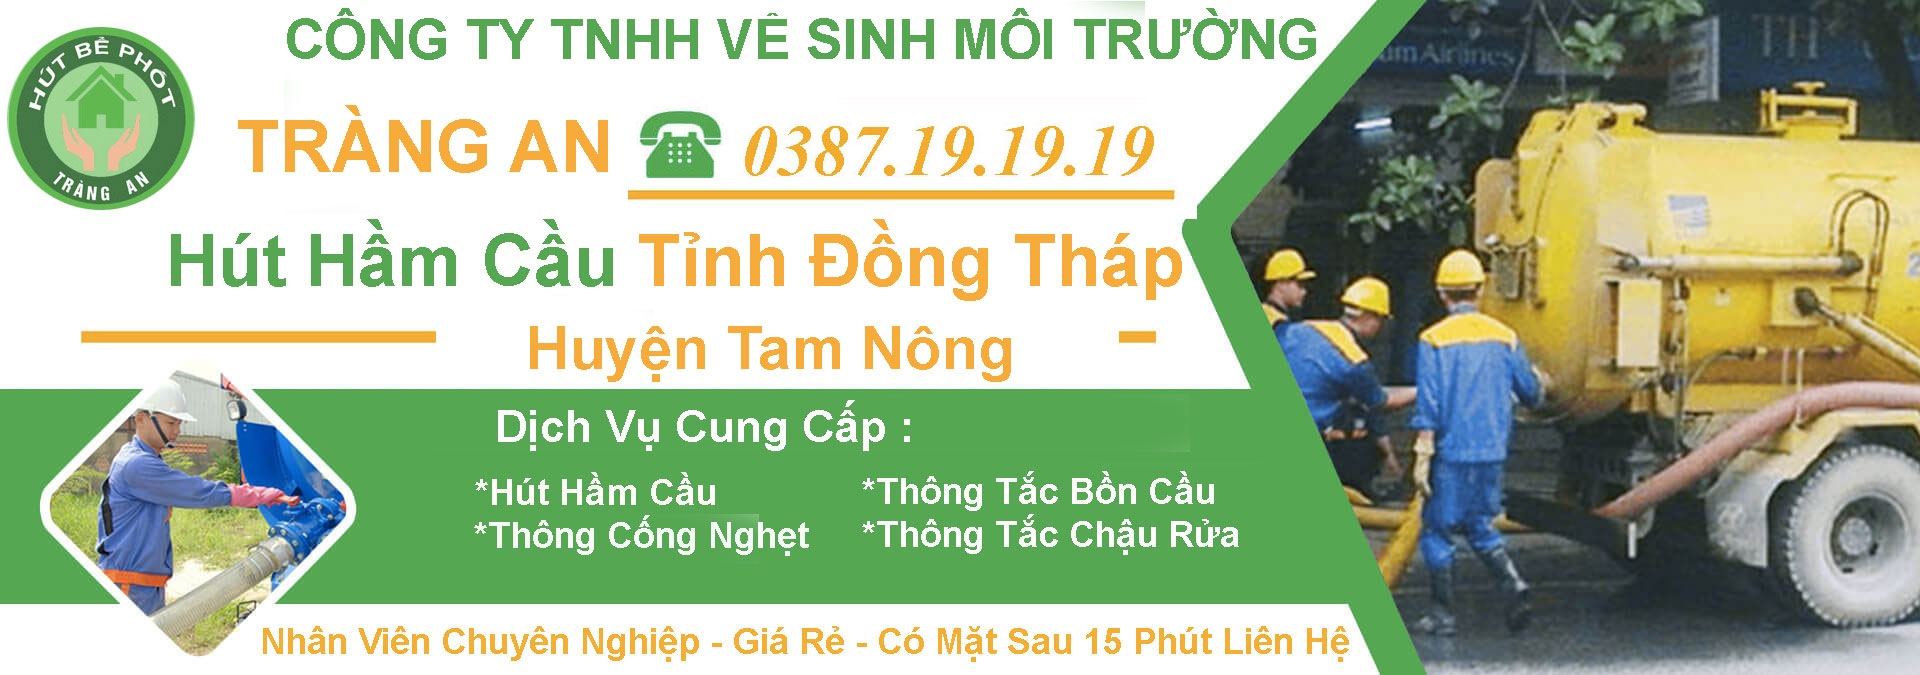 Hut Ham Cau Tinh Dong Thap Huyen Tam Nong